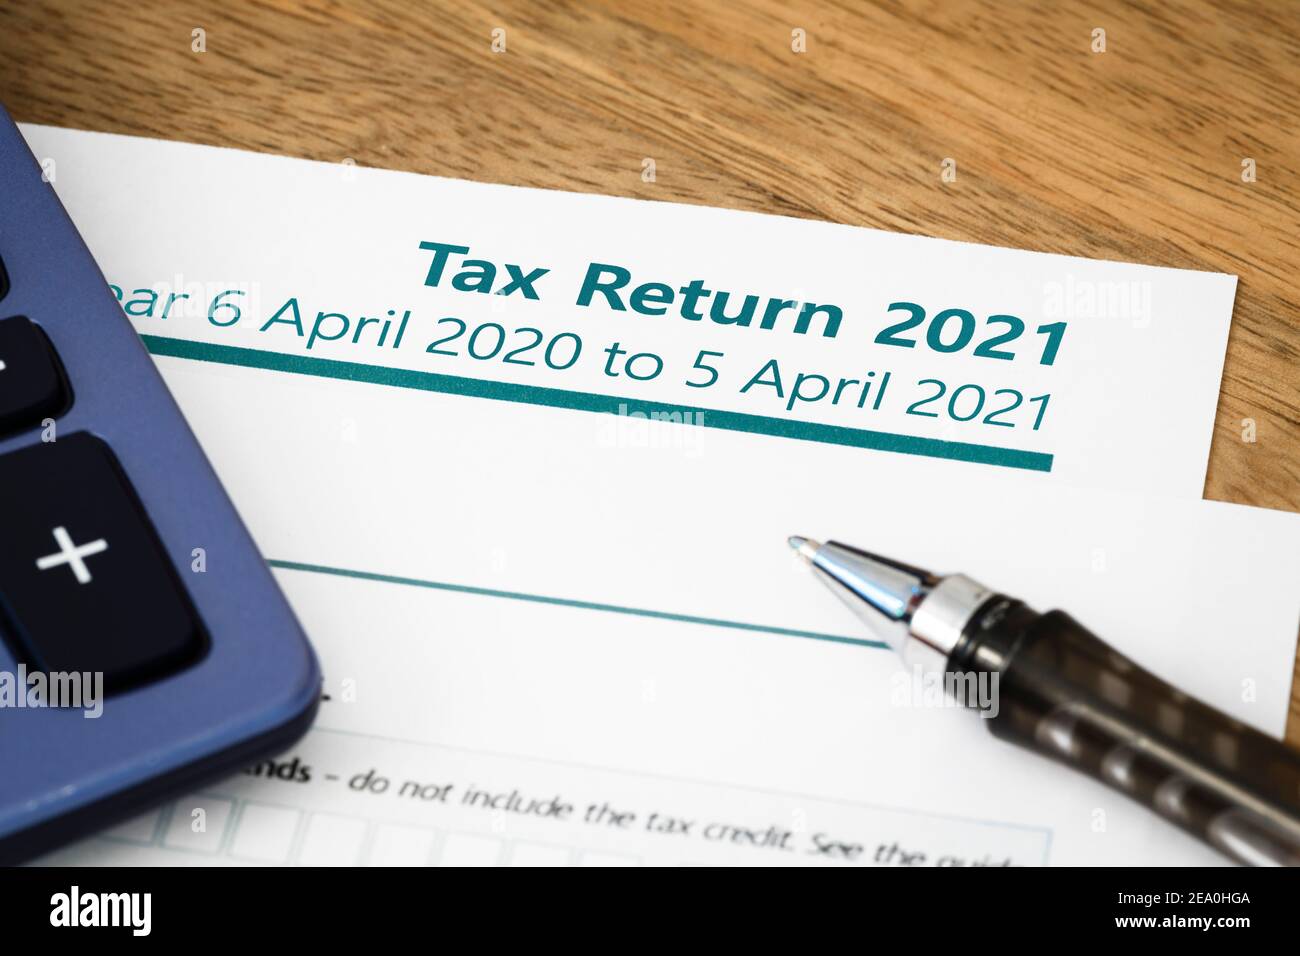 uk-hmrc-self-assessment-income-tax-return-form-2021-stock-photo-alamy